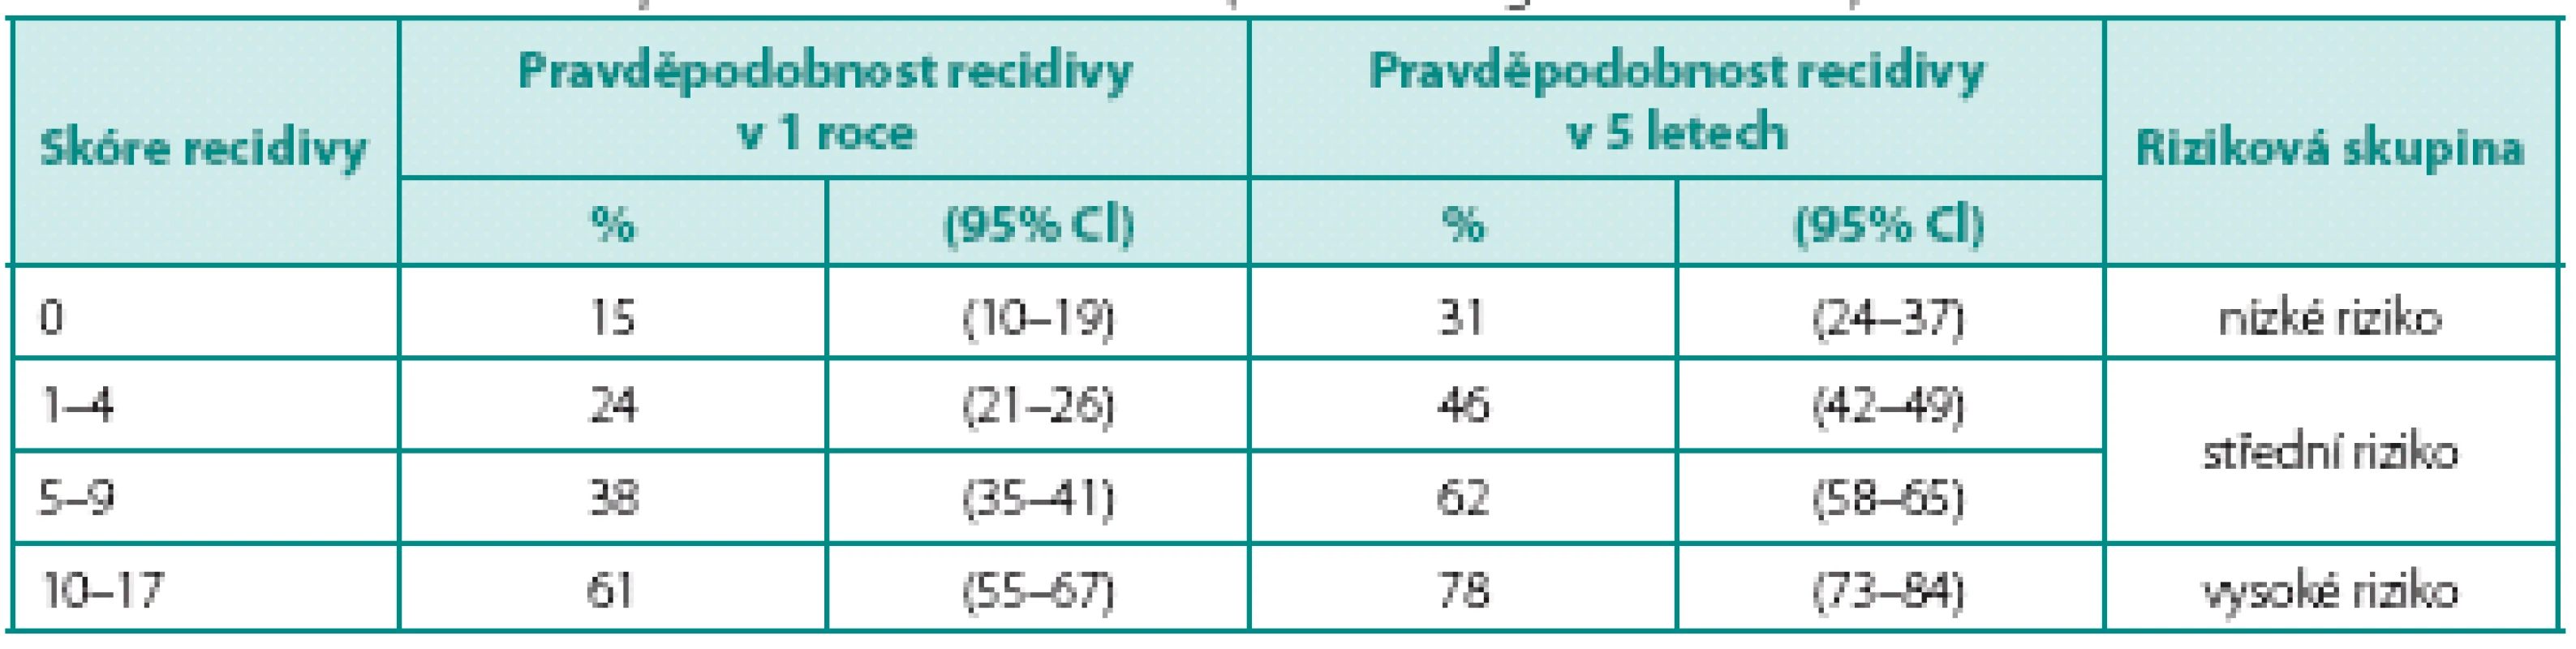 Skóre a pravděpodobnosti výskytu recidivy (zdroj: EAU doporučení 2012)
Table 2. The risk scores and probabilities of recurrence (source: EAU guidelines 2012)